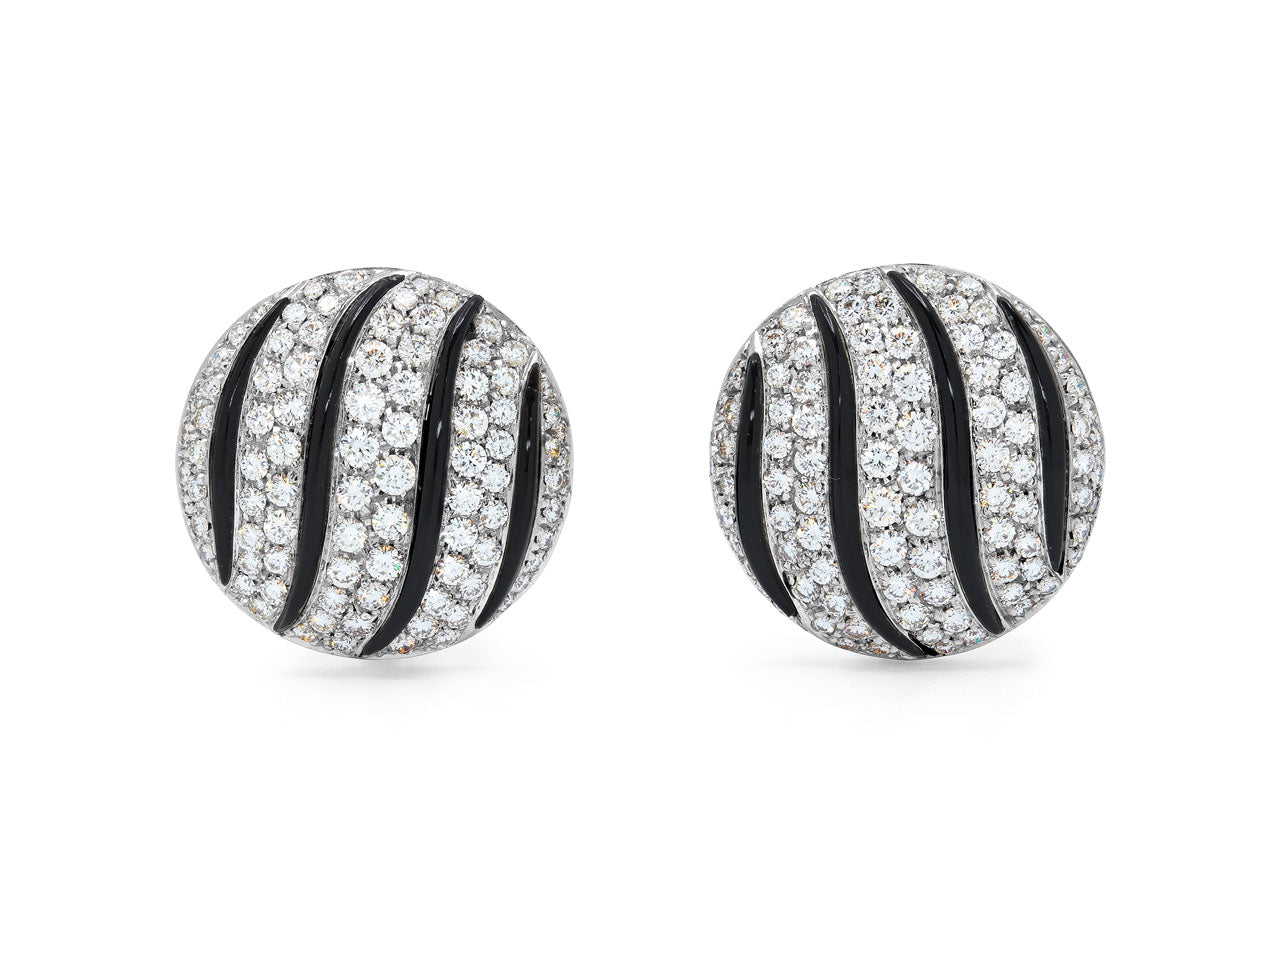 Diamond and Onyx Earrings in 18K White Gold